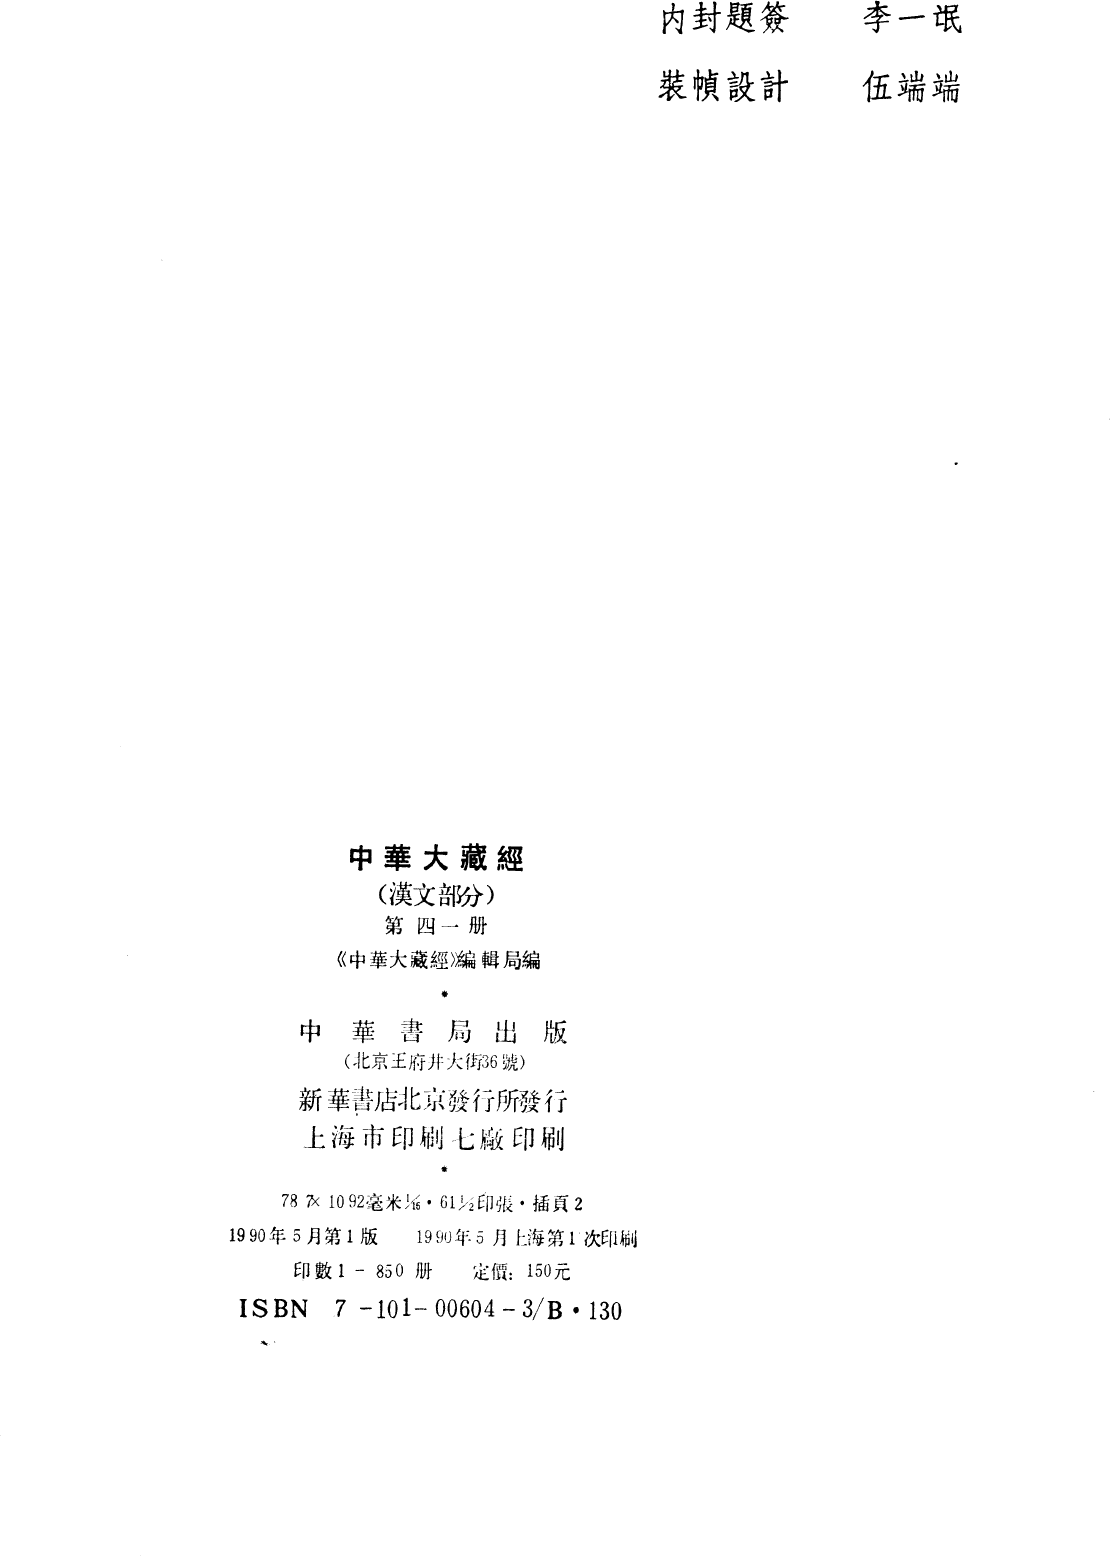 File:《中華大藏經》 第41冊 版權頁.png